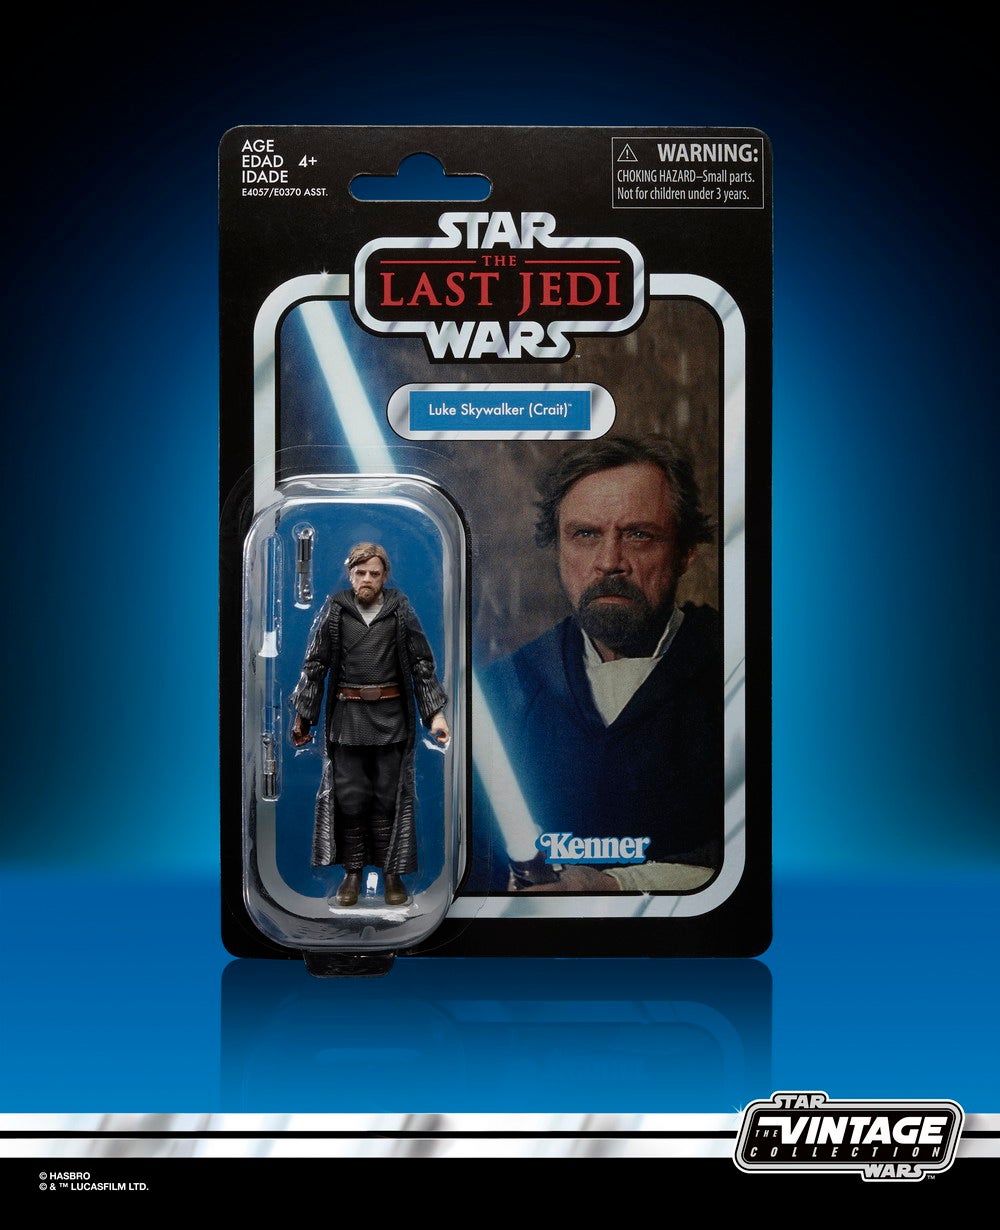 STAR WARS THE VINTAGE COLLECTION 3.75-INCH Figure Assortment - Luke Skywalker (Crait) in pck 1